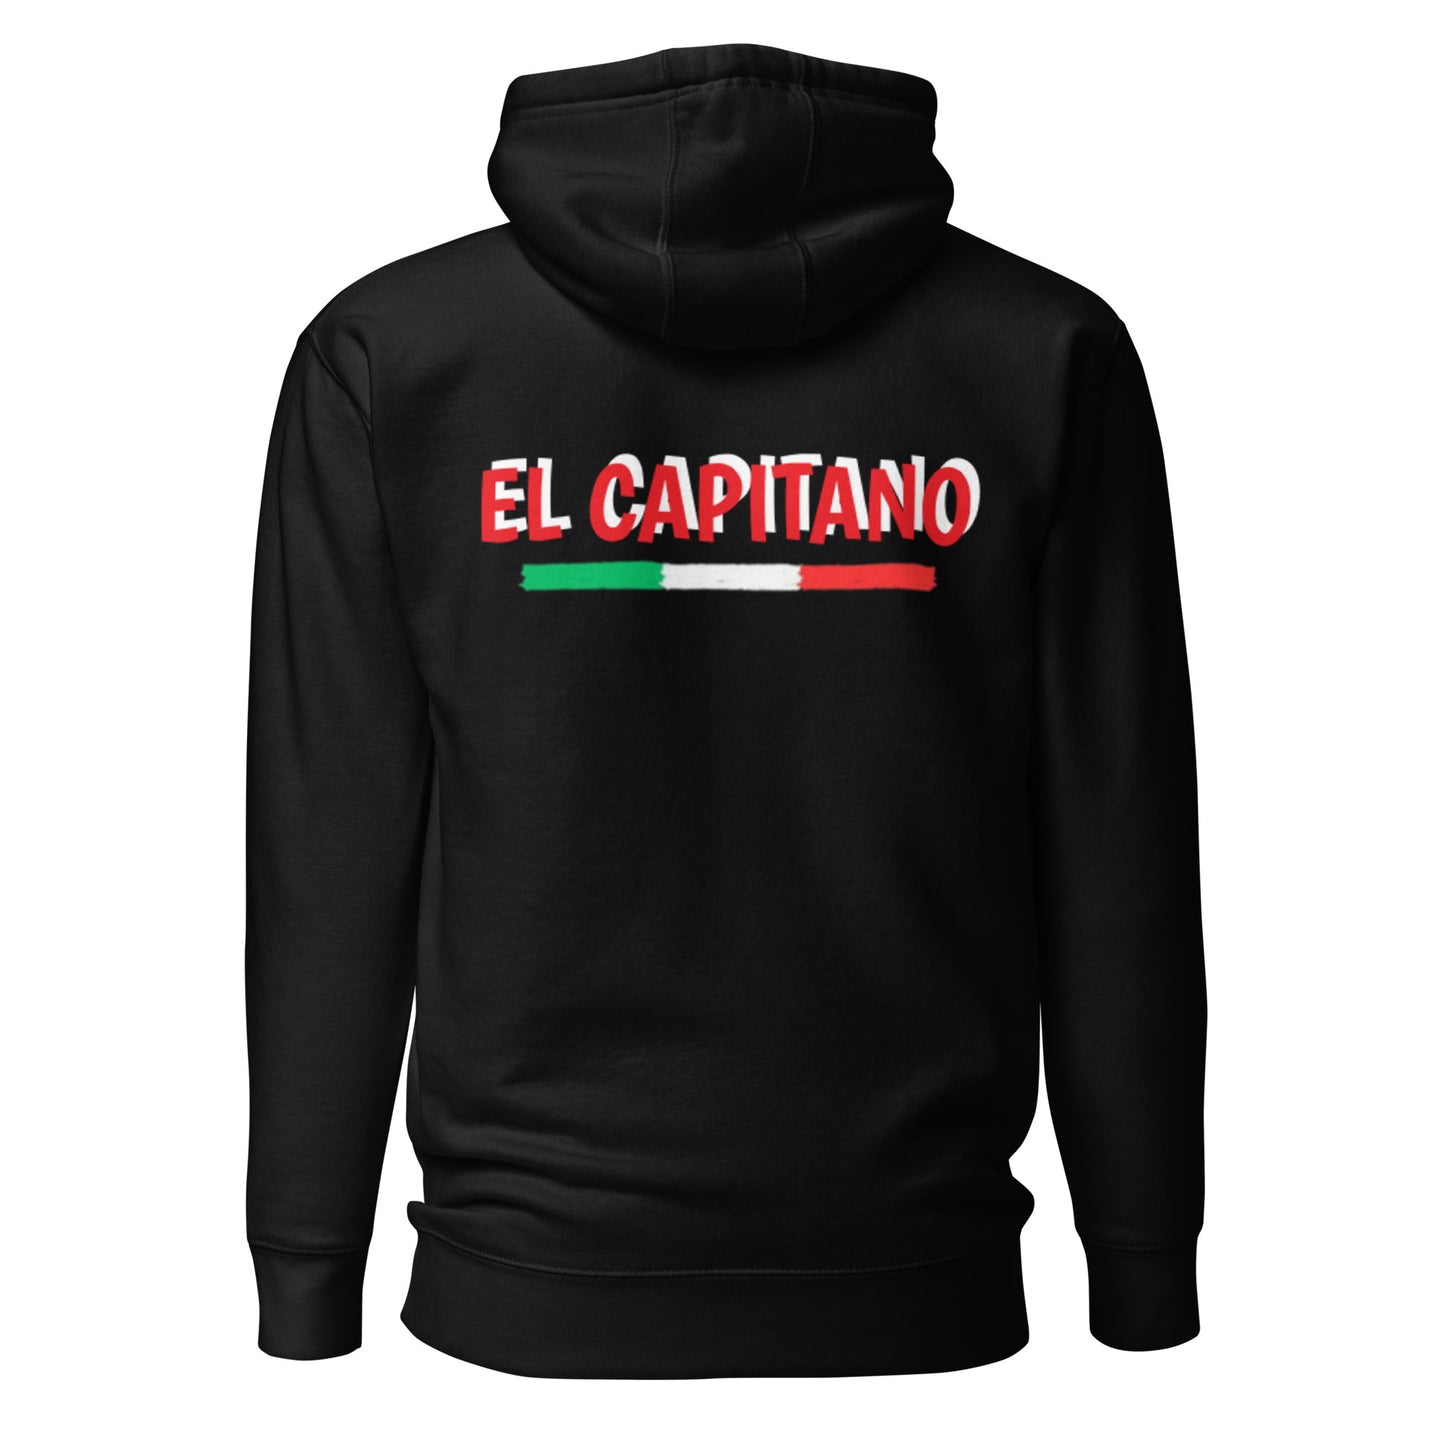 "El Capitano" Italian Inspired Hoodies